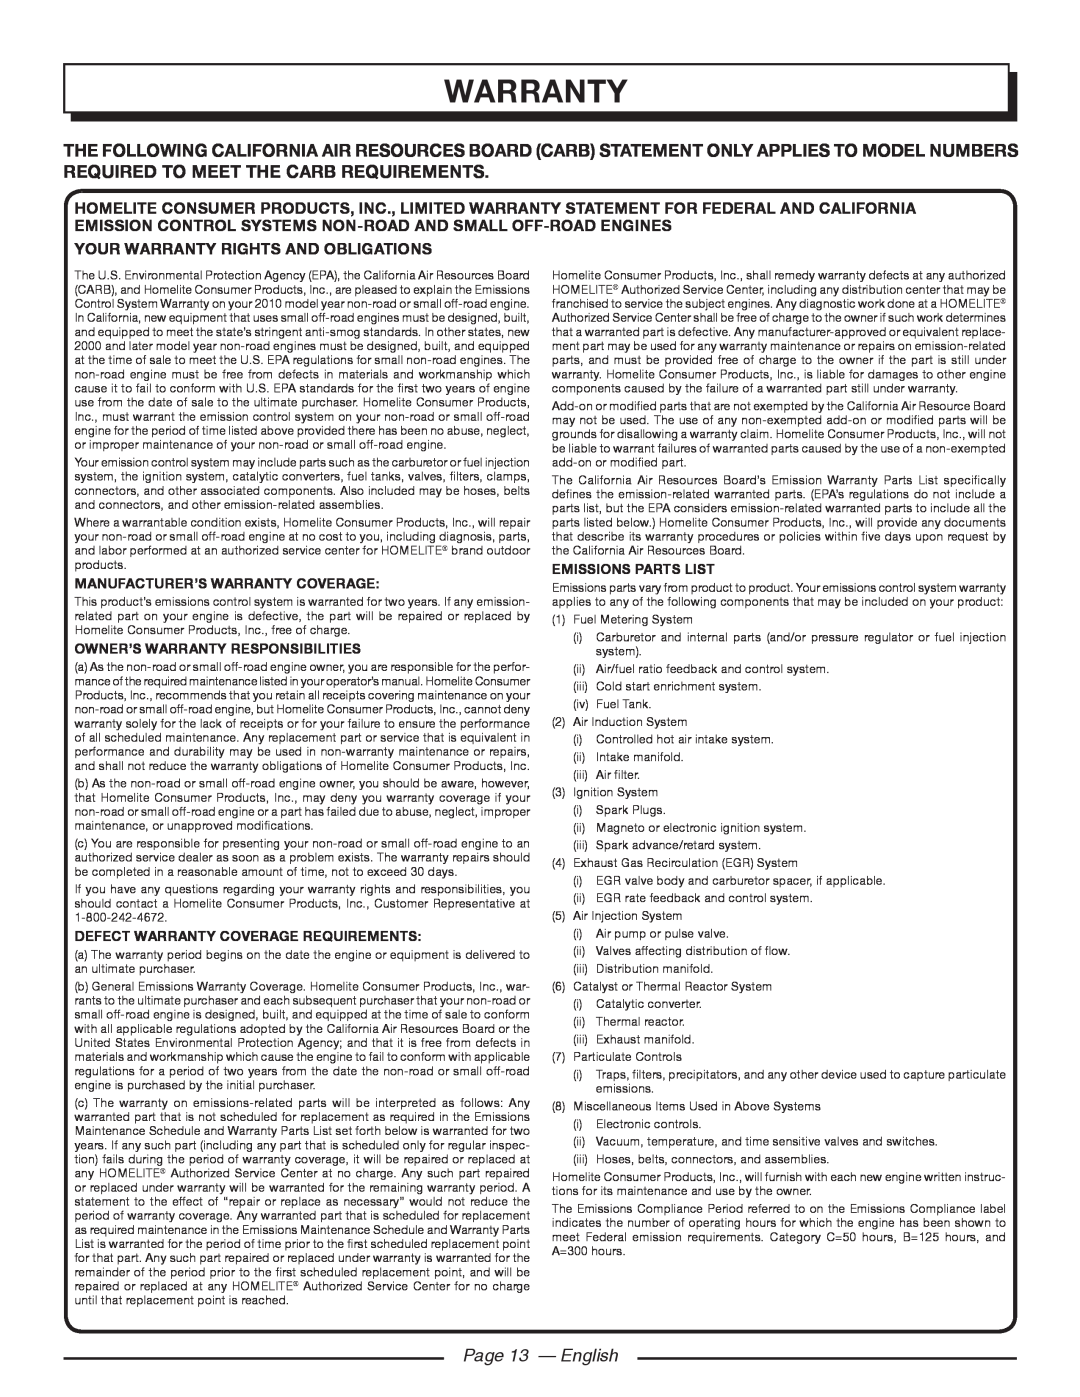 Homelite UT32600, UT32650 Page 13 - English, Manufacturer’S Warranty Coverage, Owner’S Warranty Responsibilities 